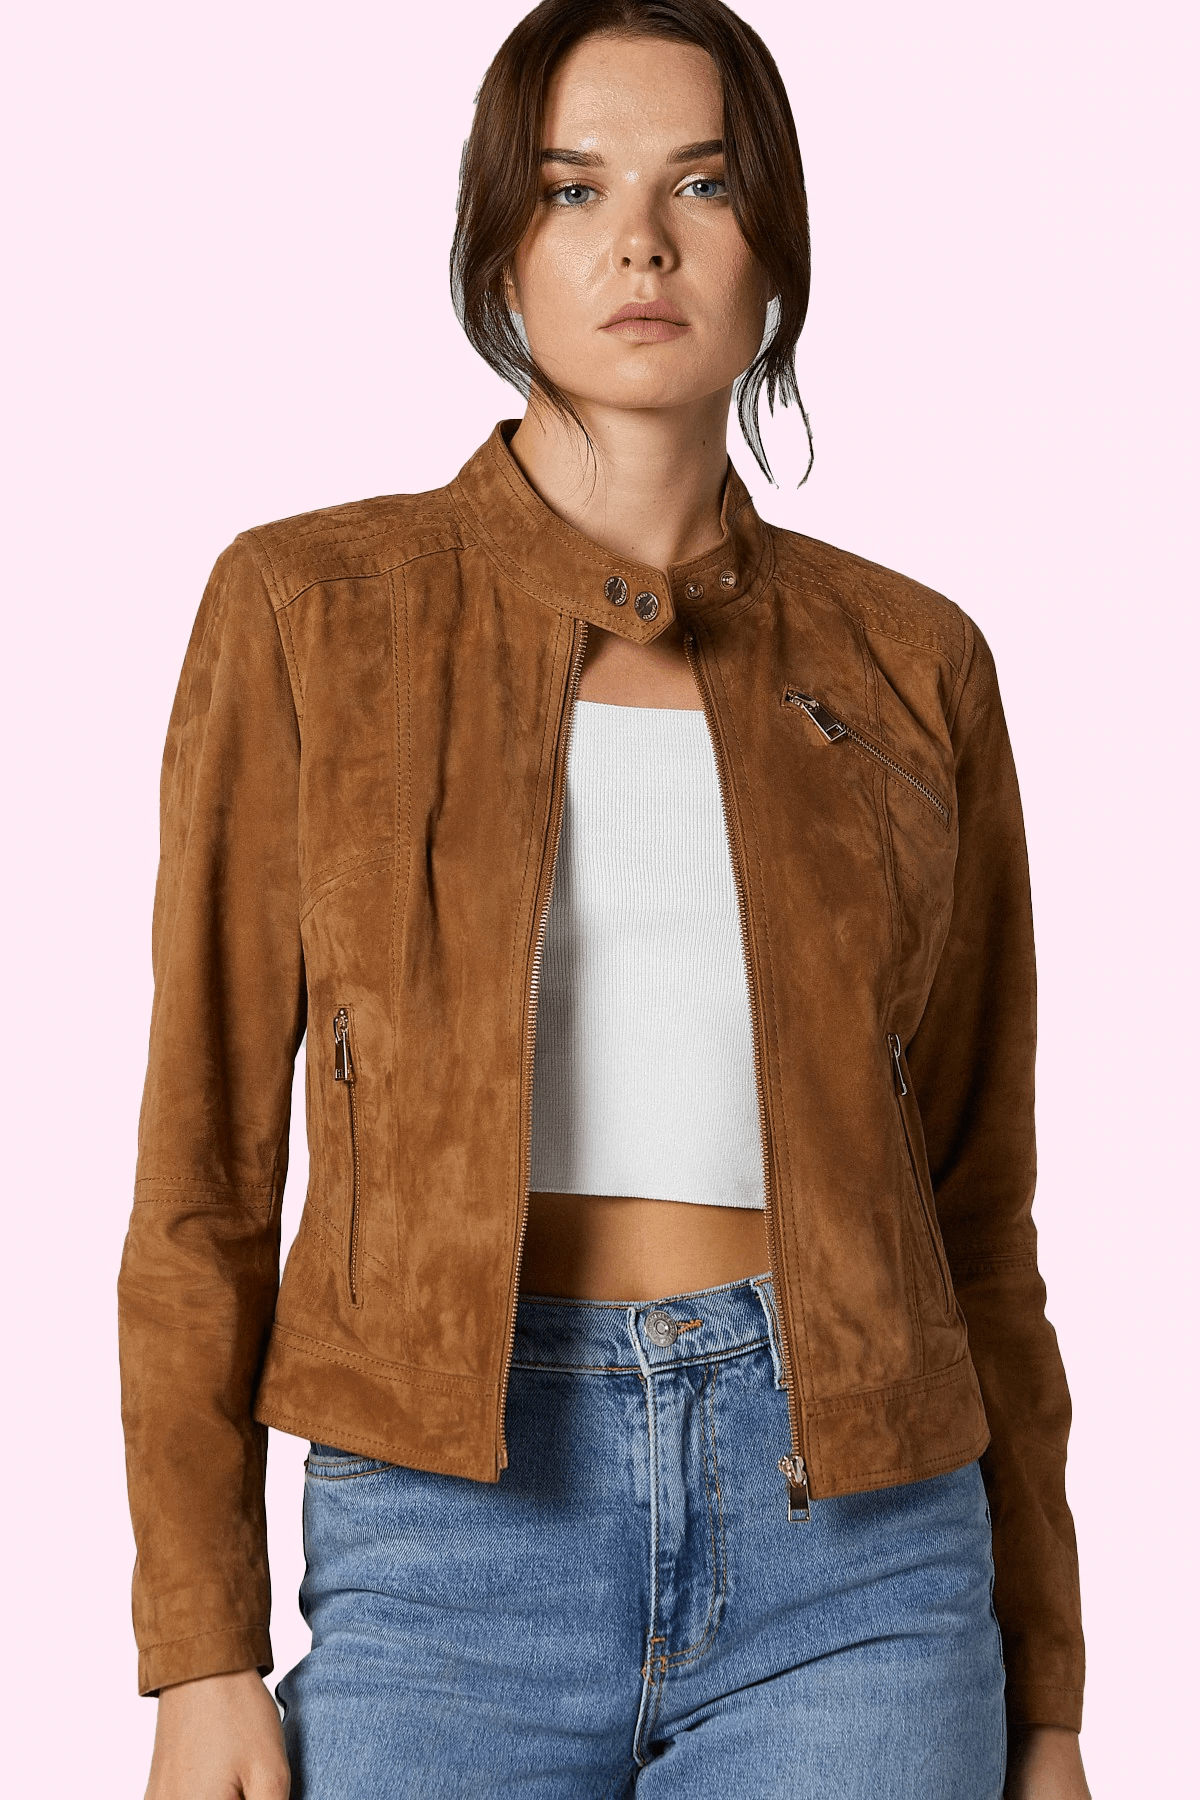 Kylie Camel Suede Leather Jacket - AirBorne Jacket